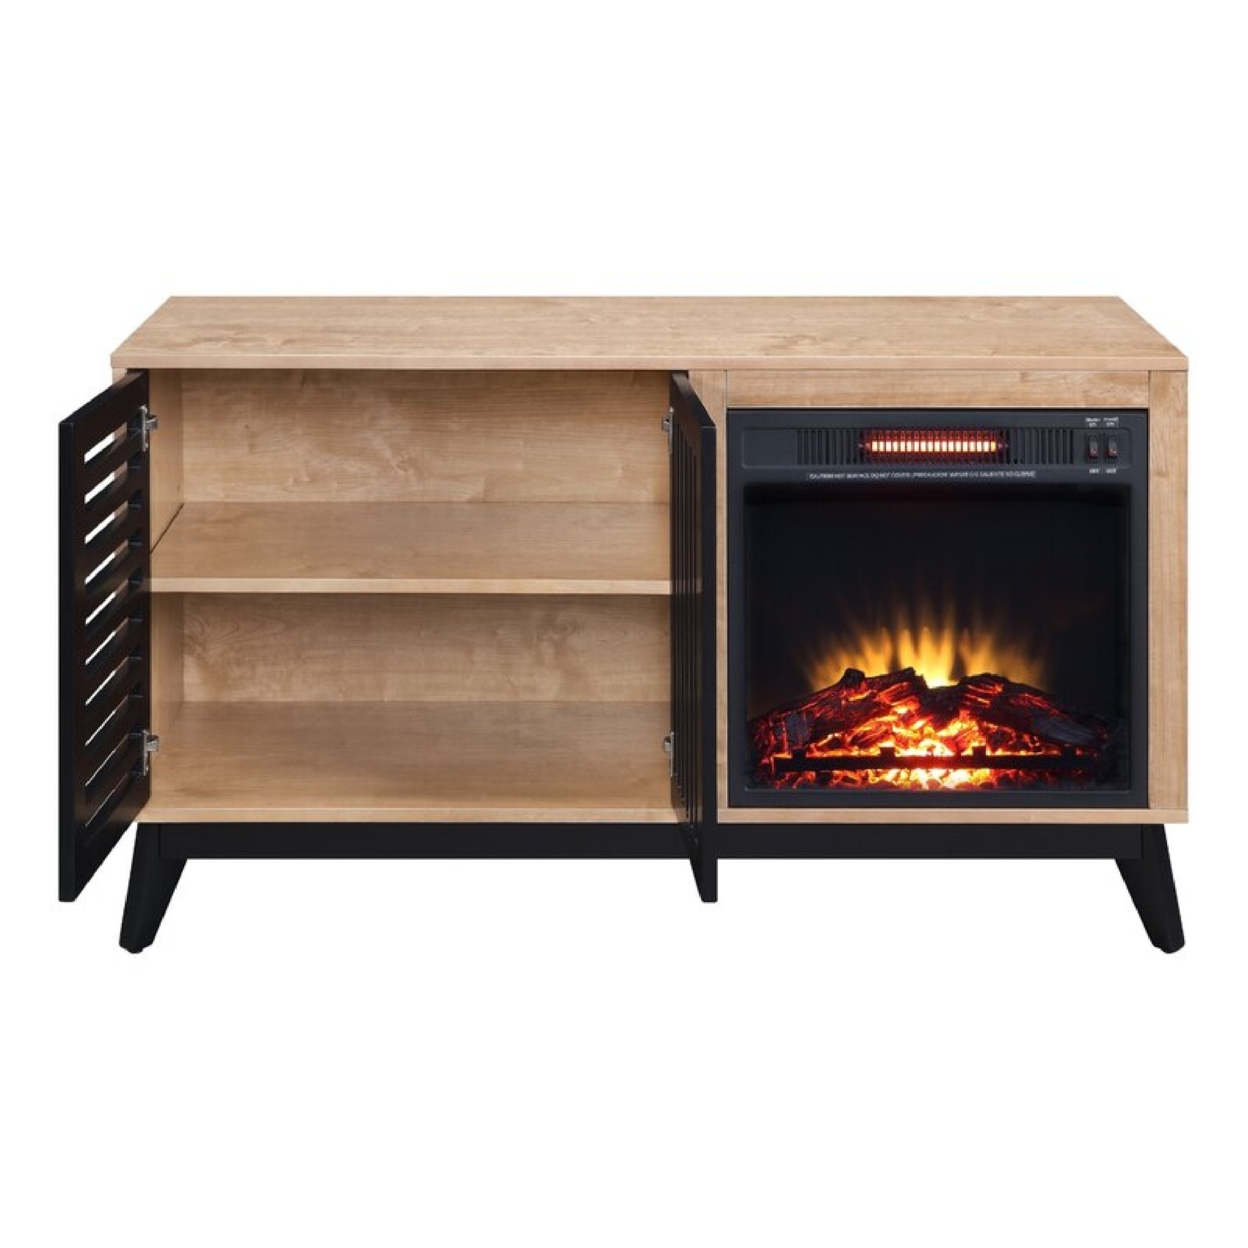 Nael 46 Inch Wood Console Table, LED Electric Fireplace, Oak Brown, Black- Saltoro Sherpi